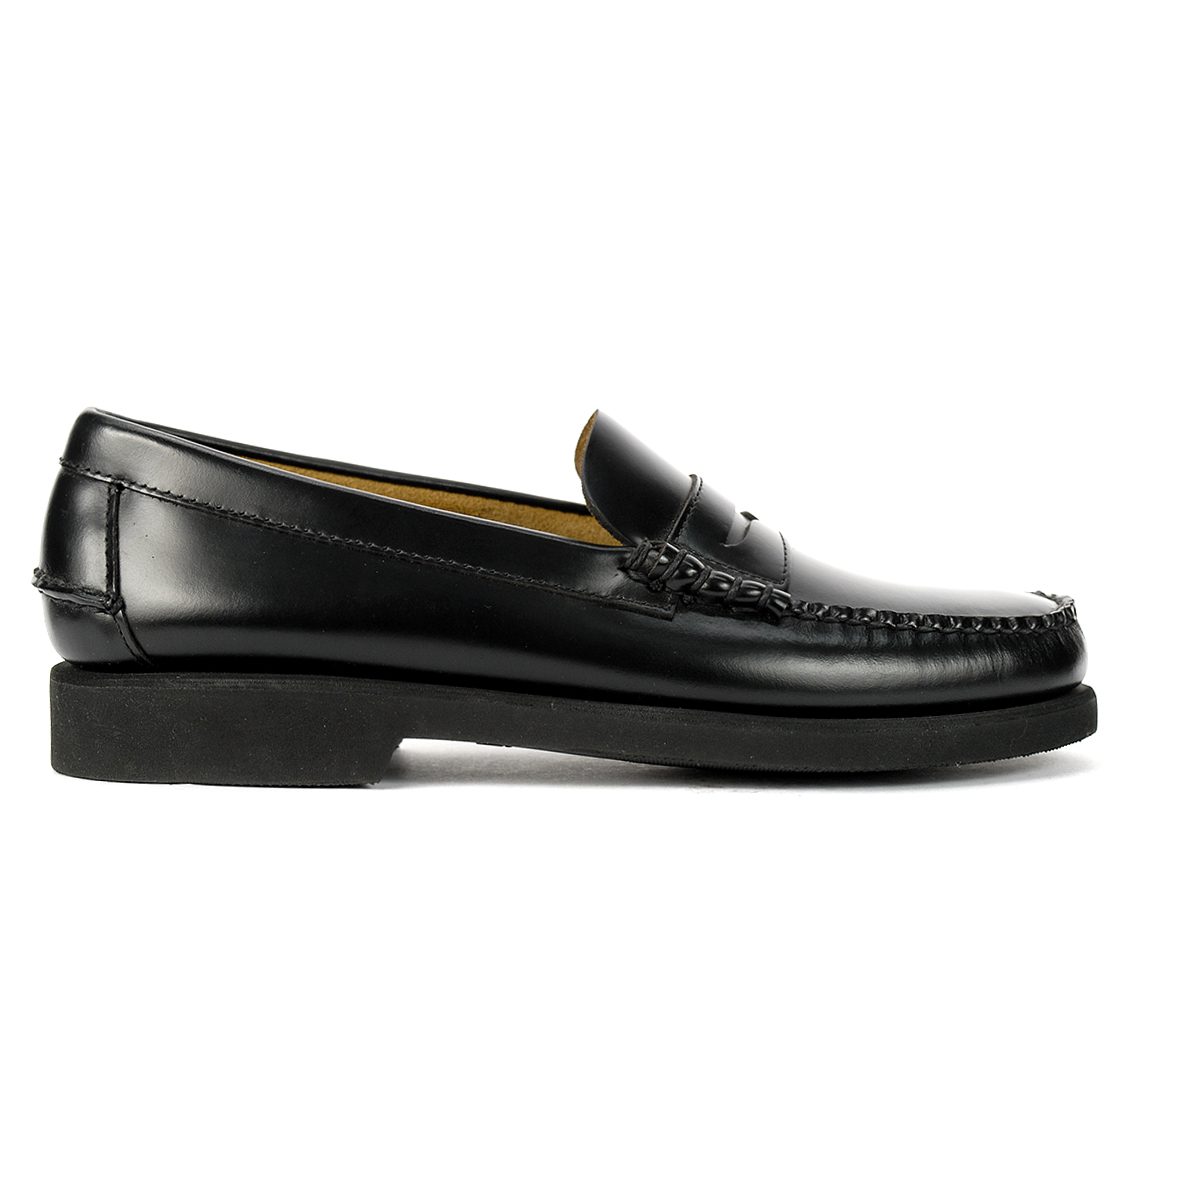 Sebago Men's Dan Polaris Black Boat Shoes 7001GW0.902 NEW | eBay